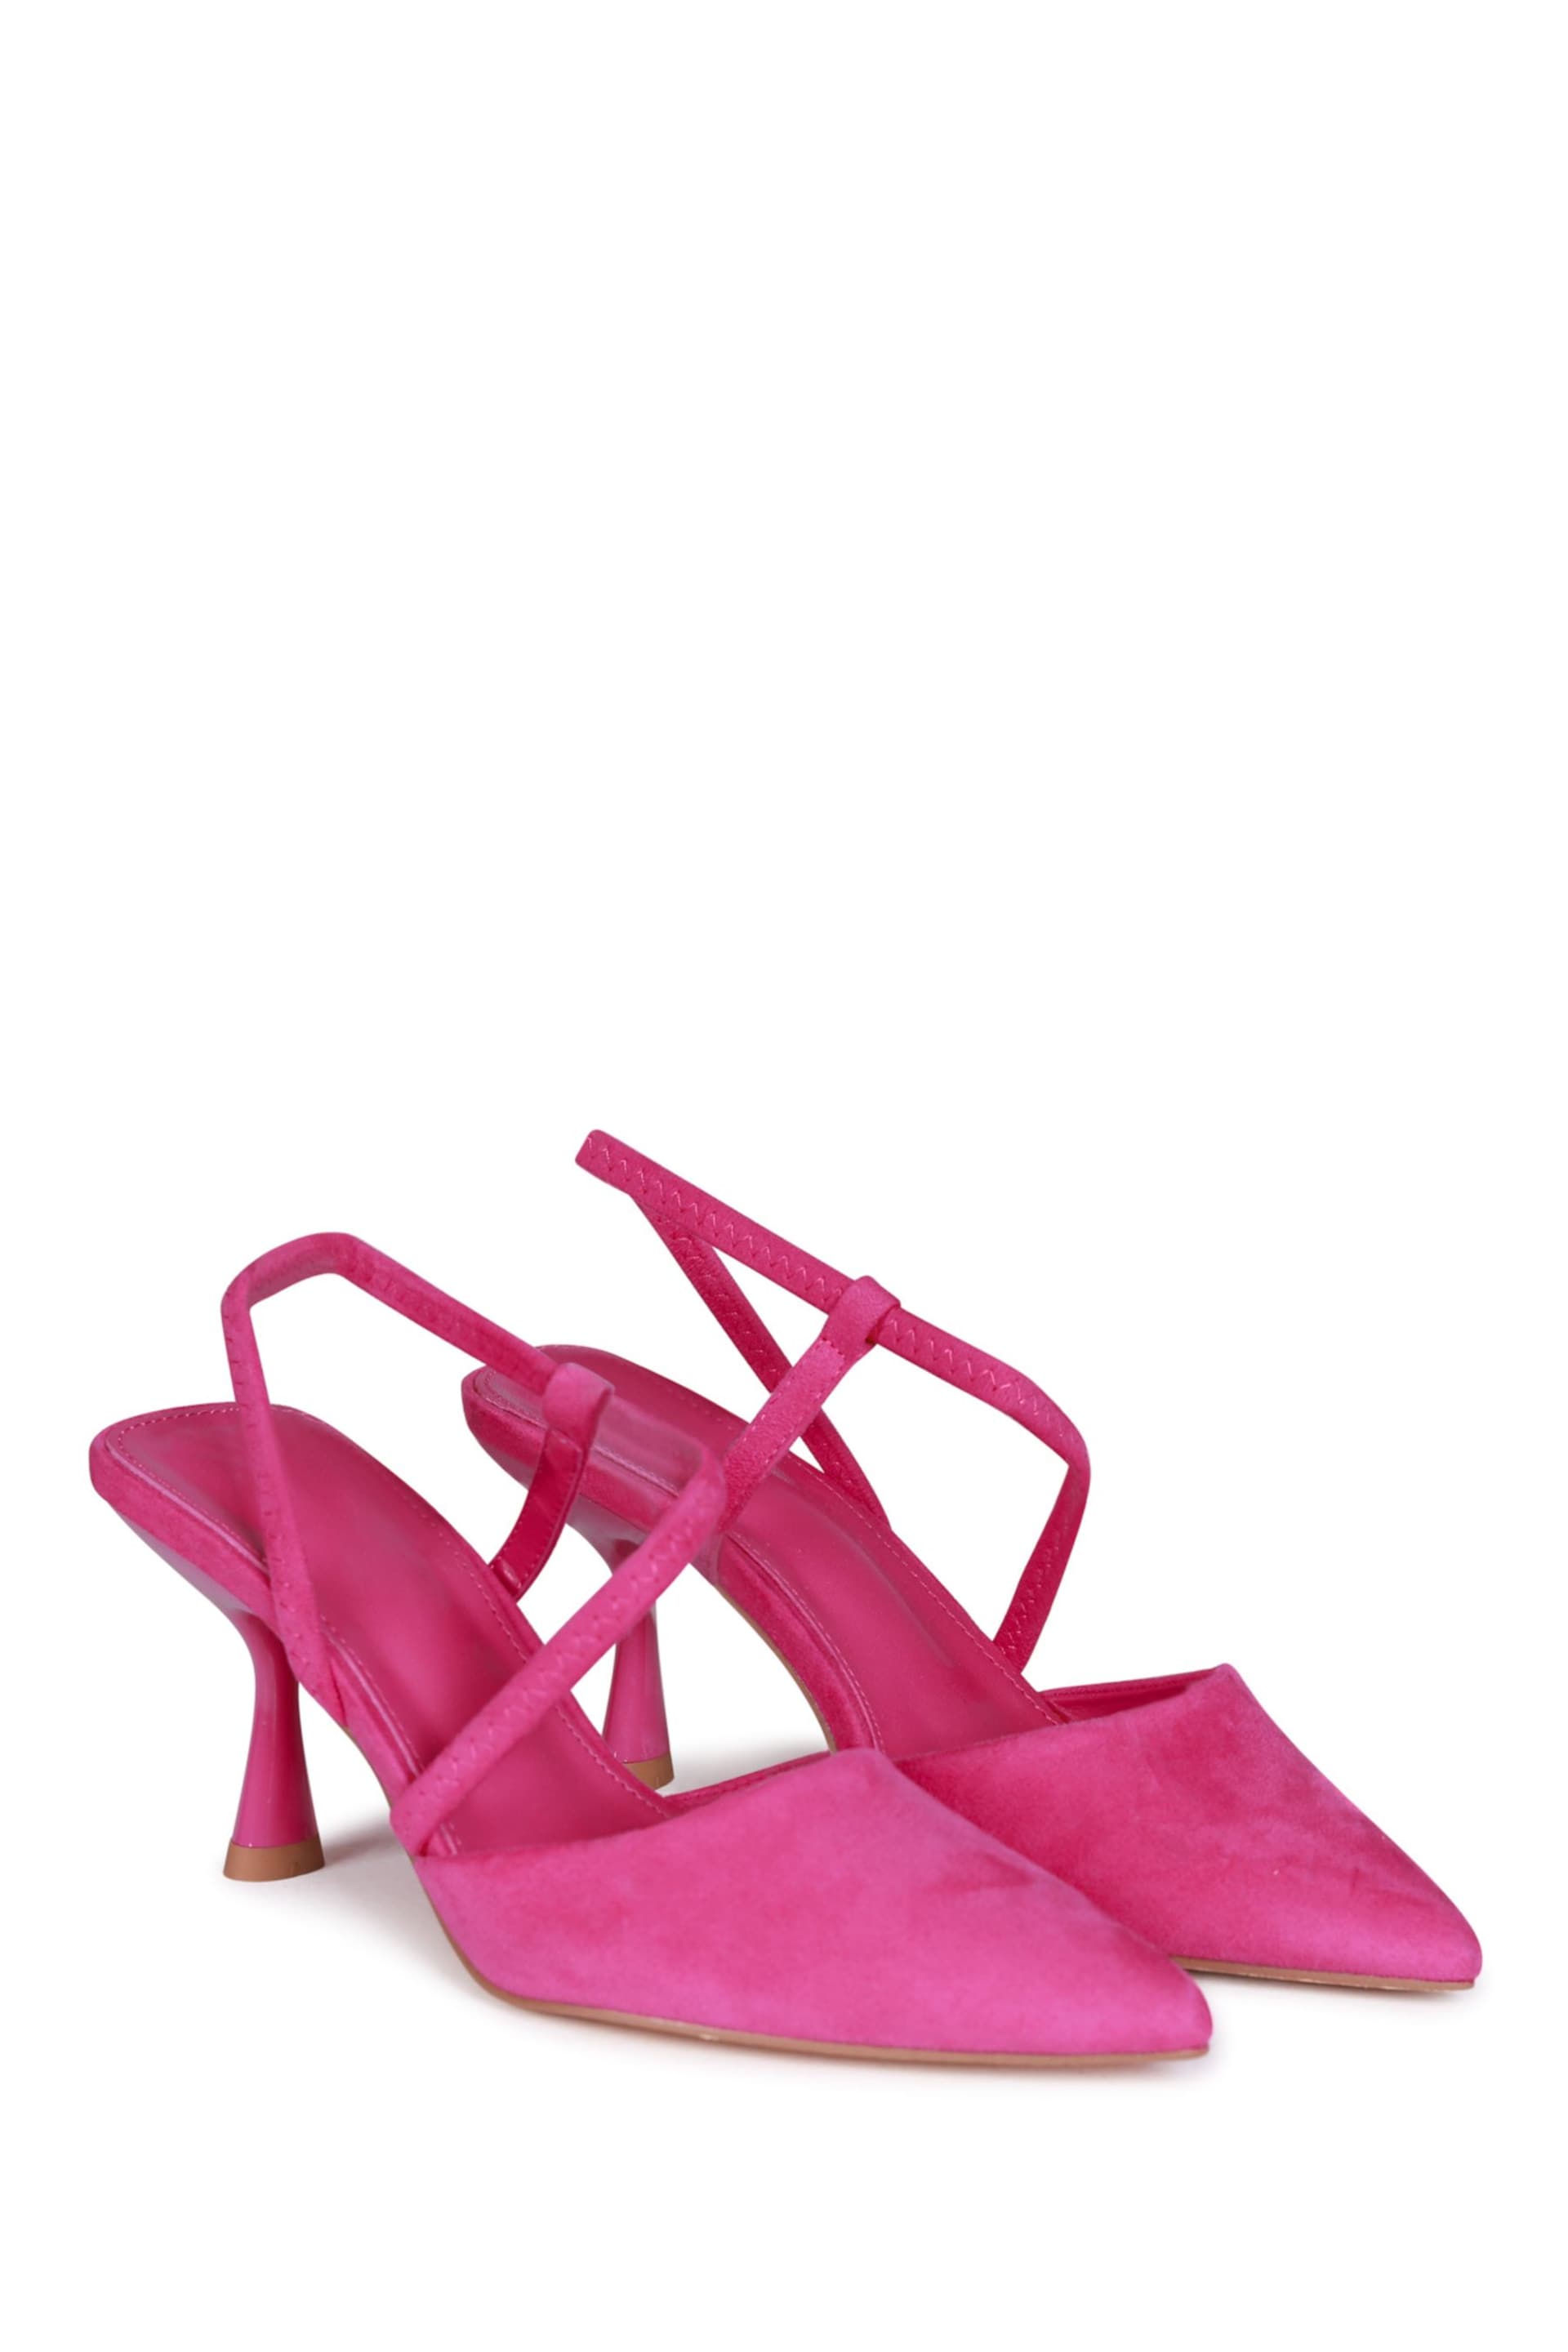 Linzi Pink Allie Wrap Around Sling Back Court Heels - Image 3 of 4